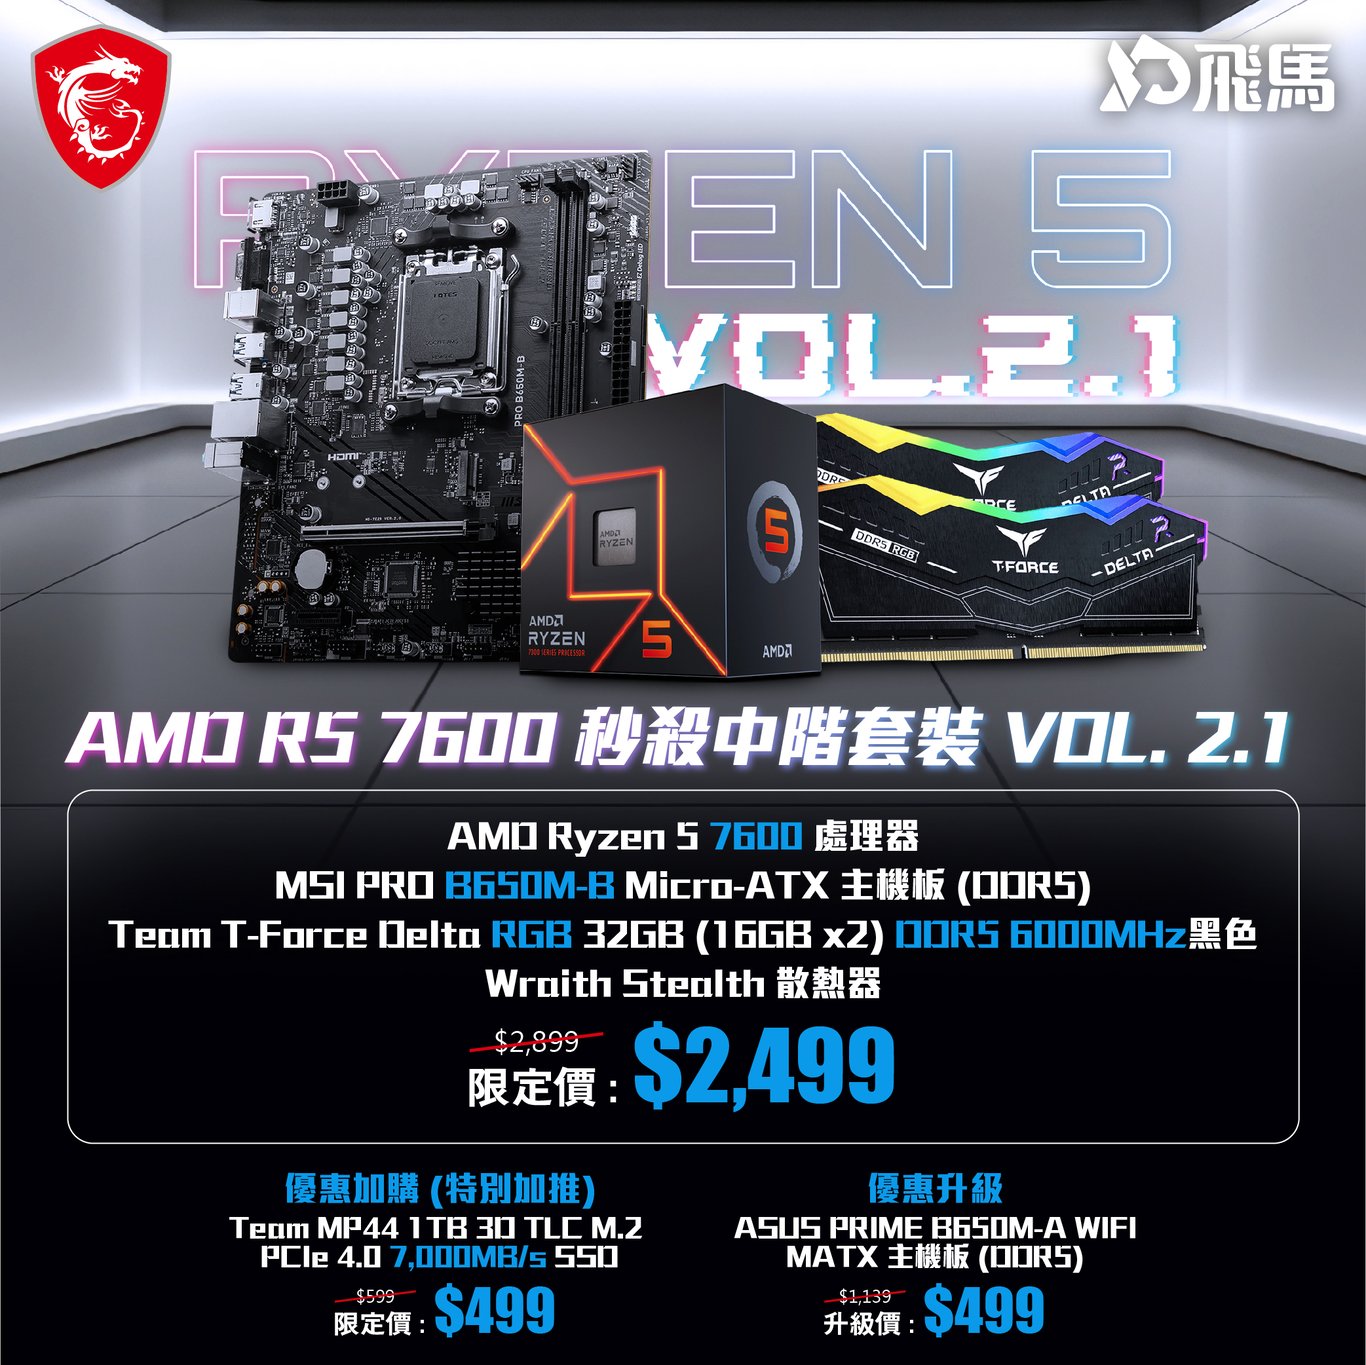 MSI AMD R5 7600 秒殺中階套裝 VOL.2.1